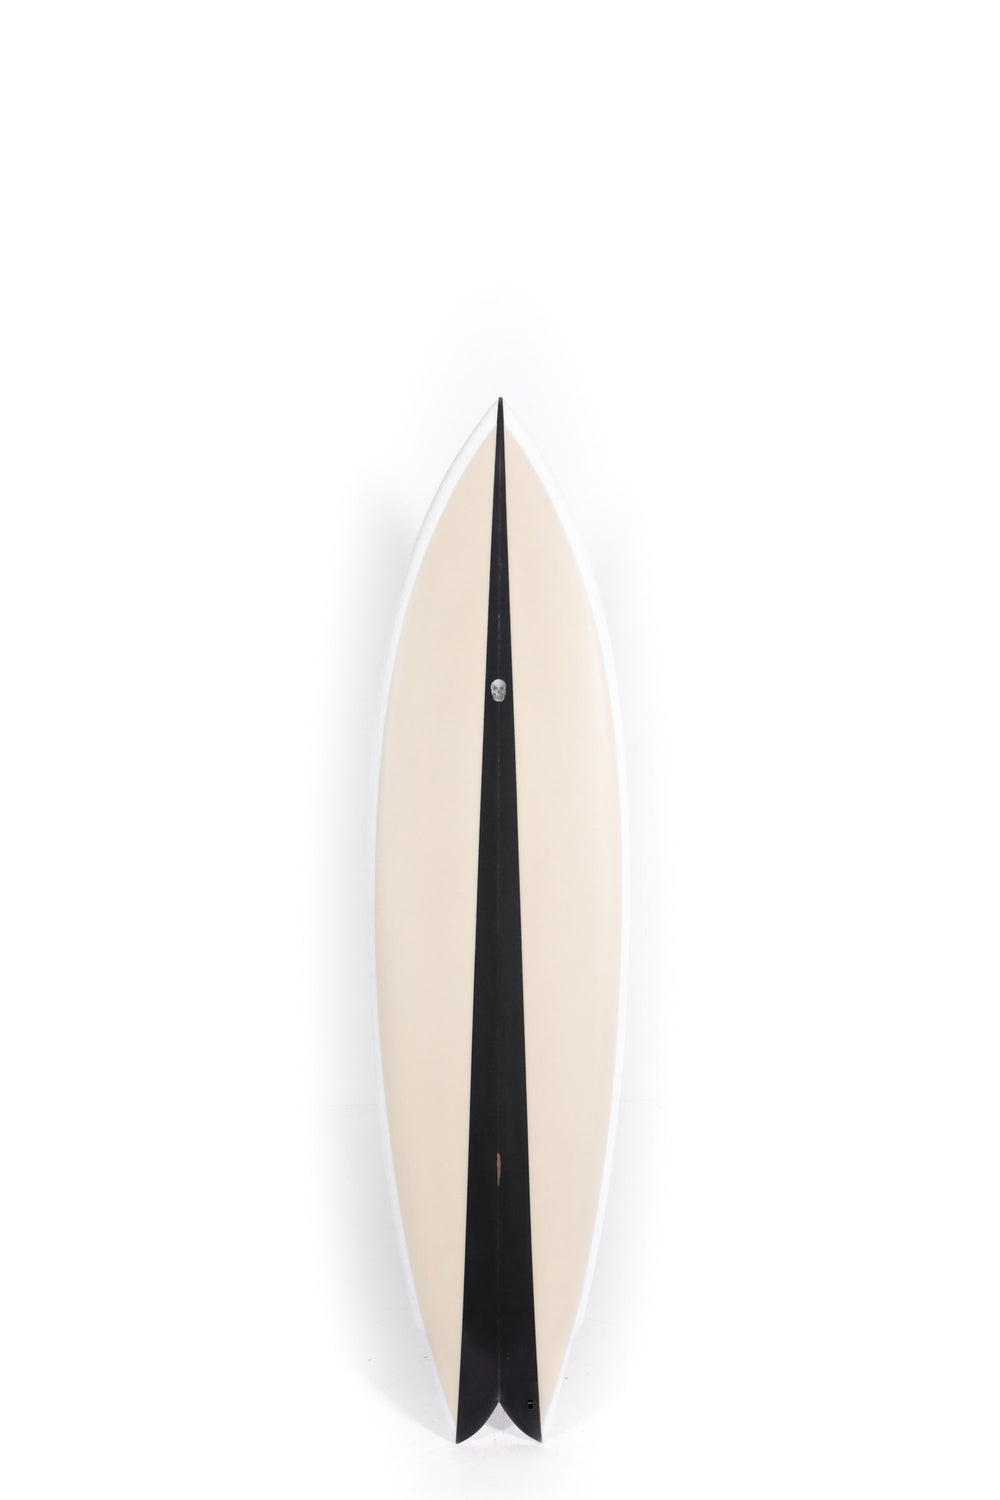 Pukas Surf Shop Christenson Surfboards Wolverine 6'10